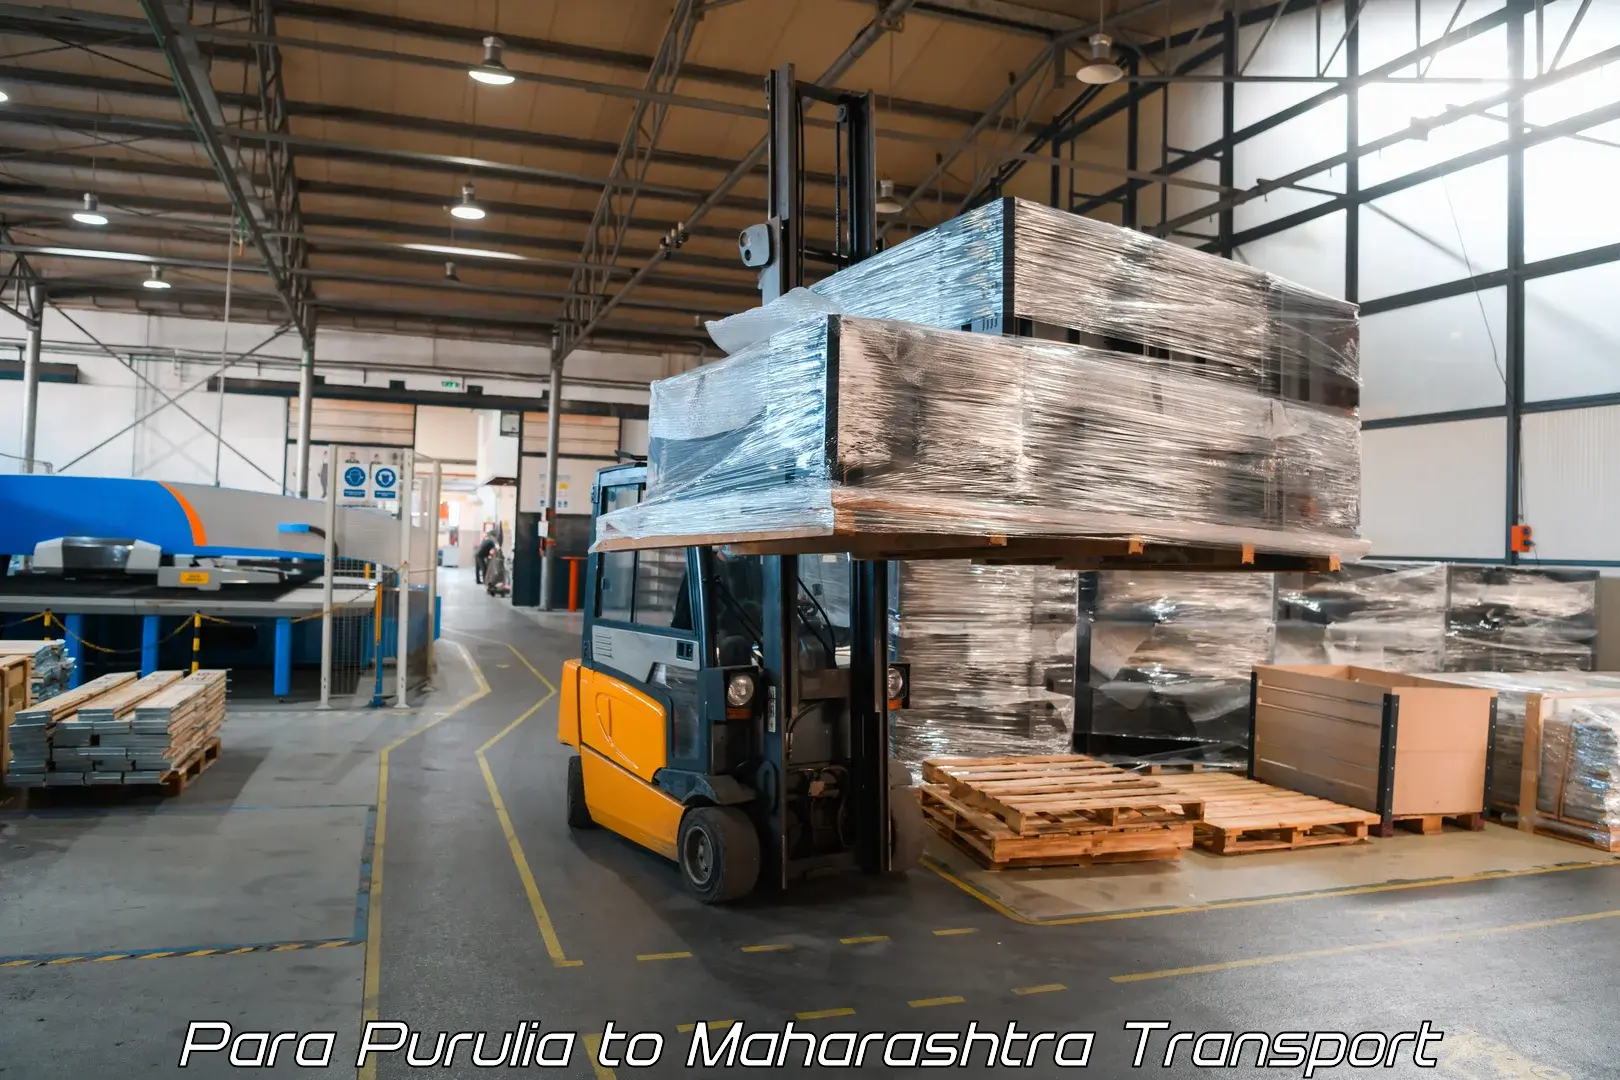 Lorry transport service Para Purulia to Alephata